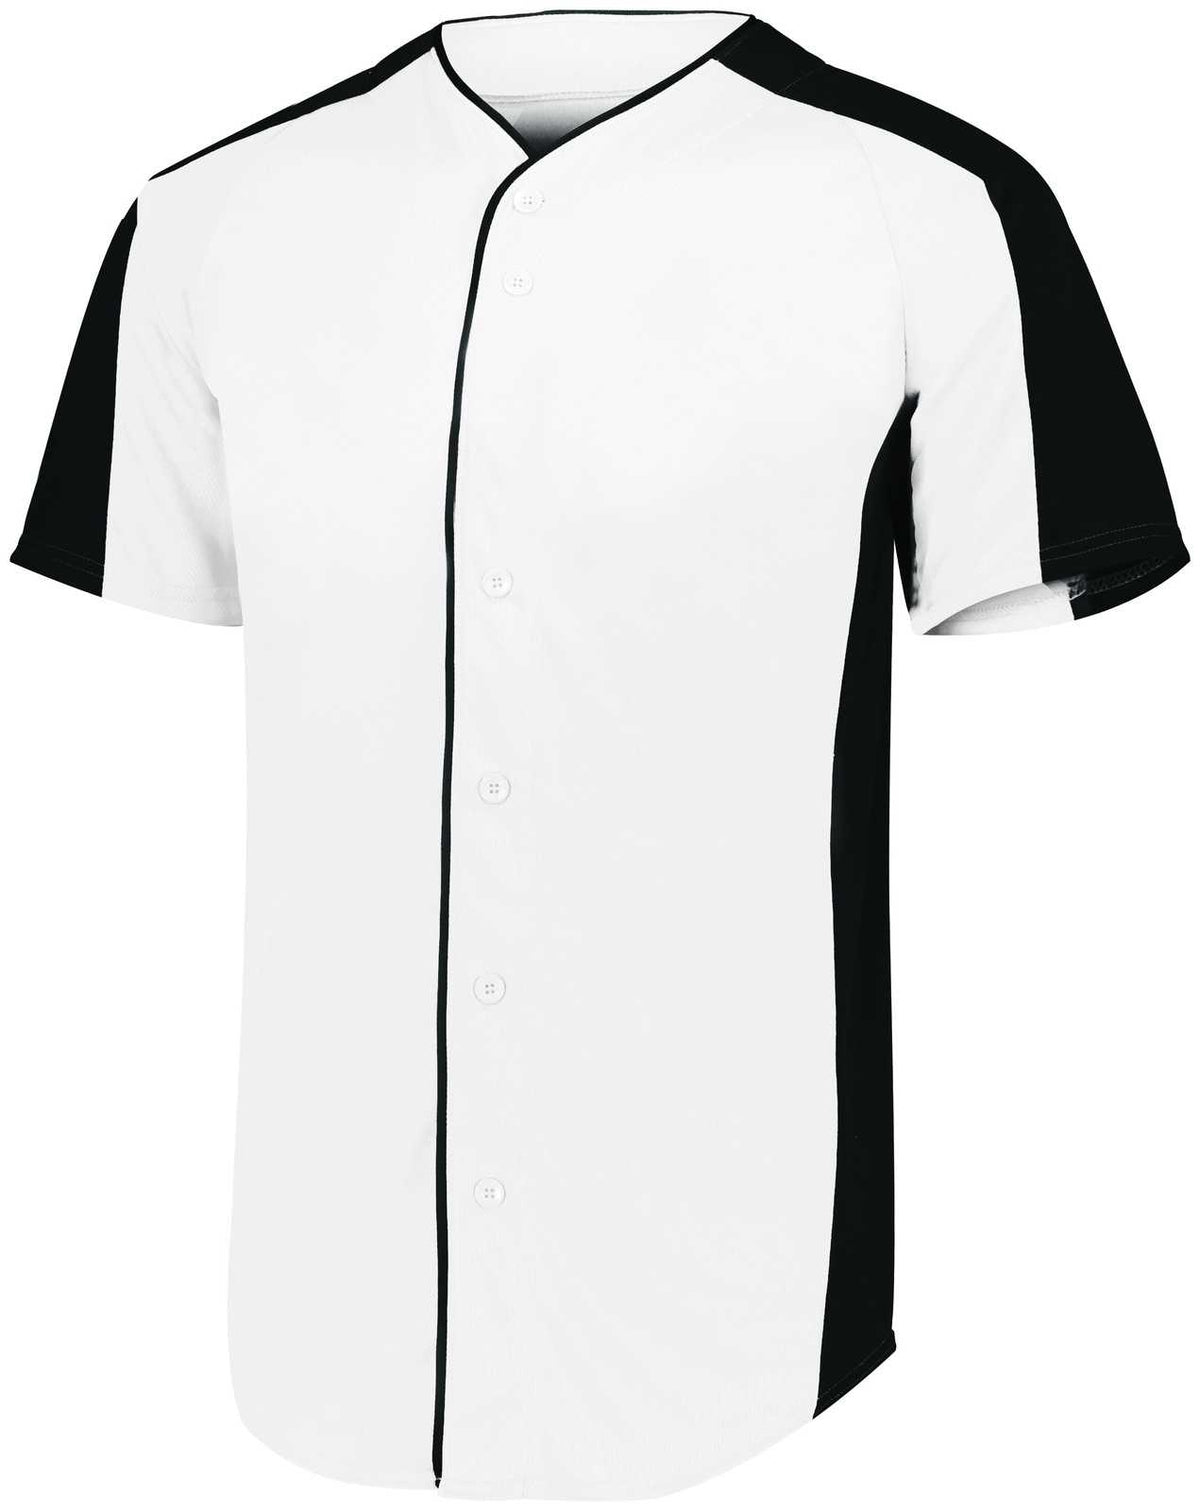 Augusta 1655 Full-Button Baseball Jersey - White Black - HIT a Double